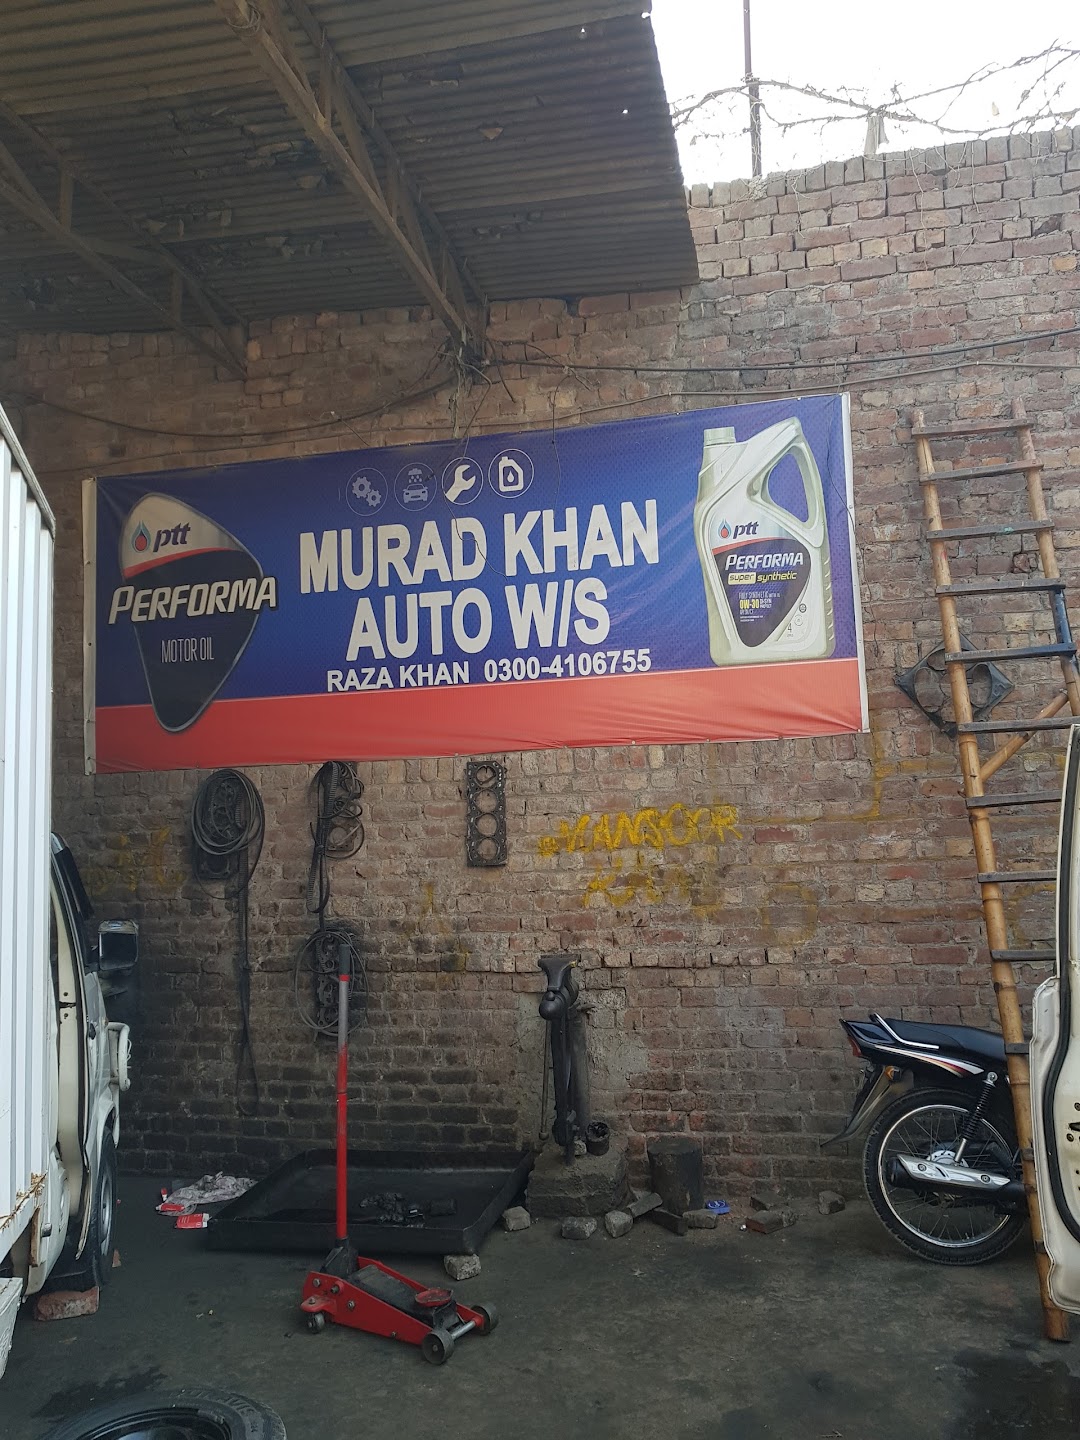 Murad Khan Auto Workshop